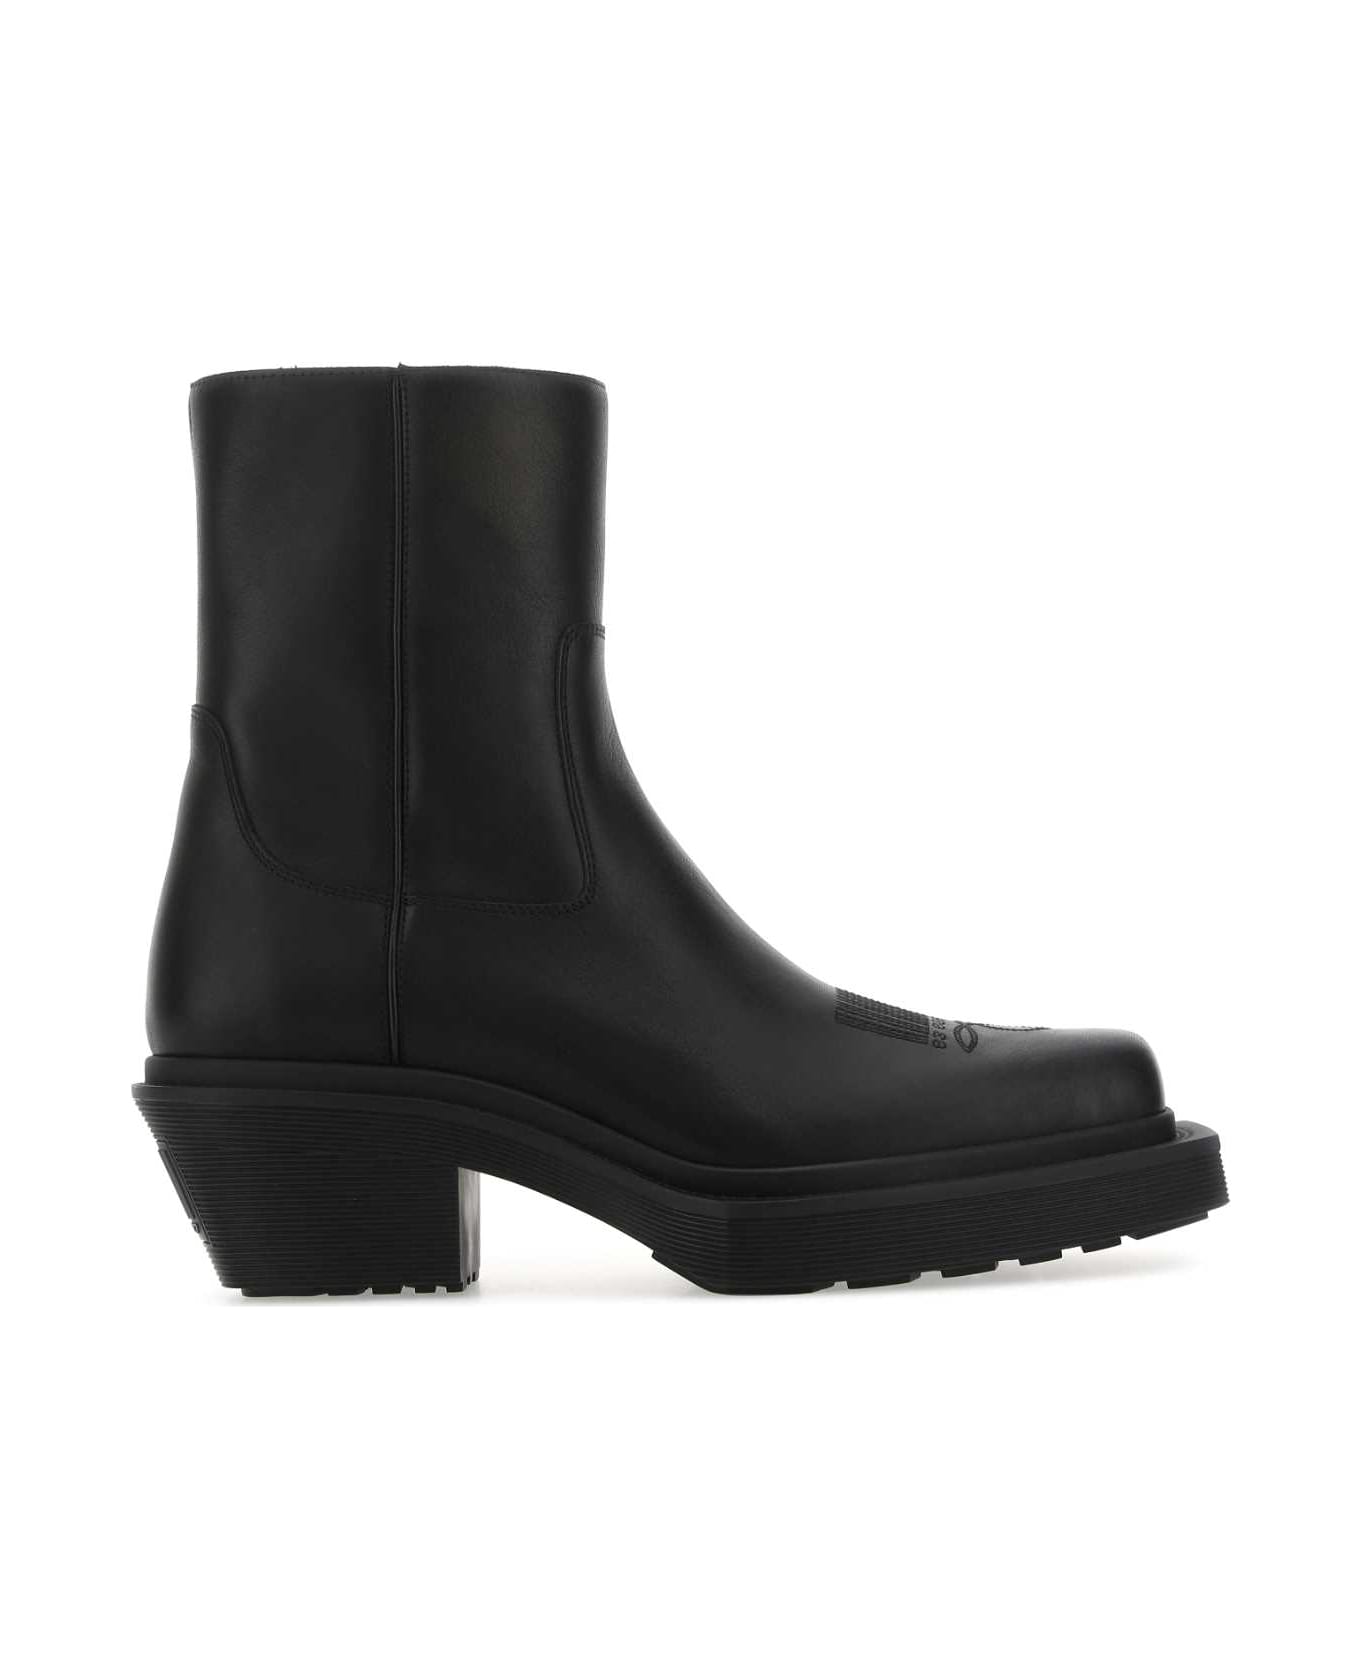 VTMNTS Black Leather Ankle Boots - MATTEBLACK ブーツ